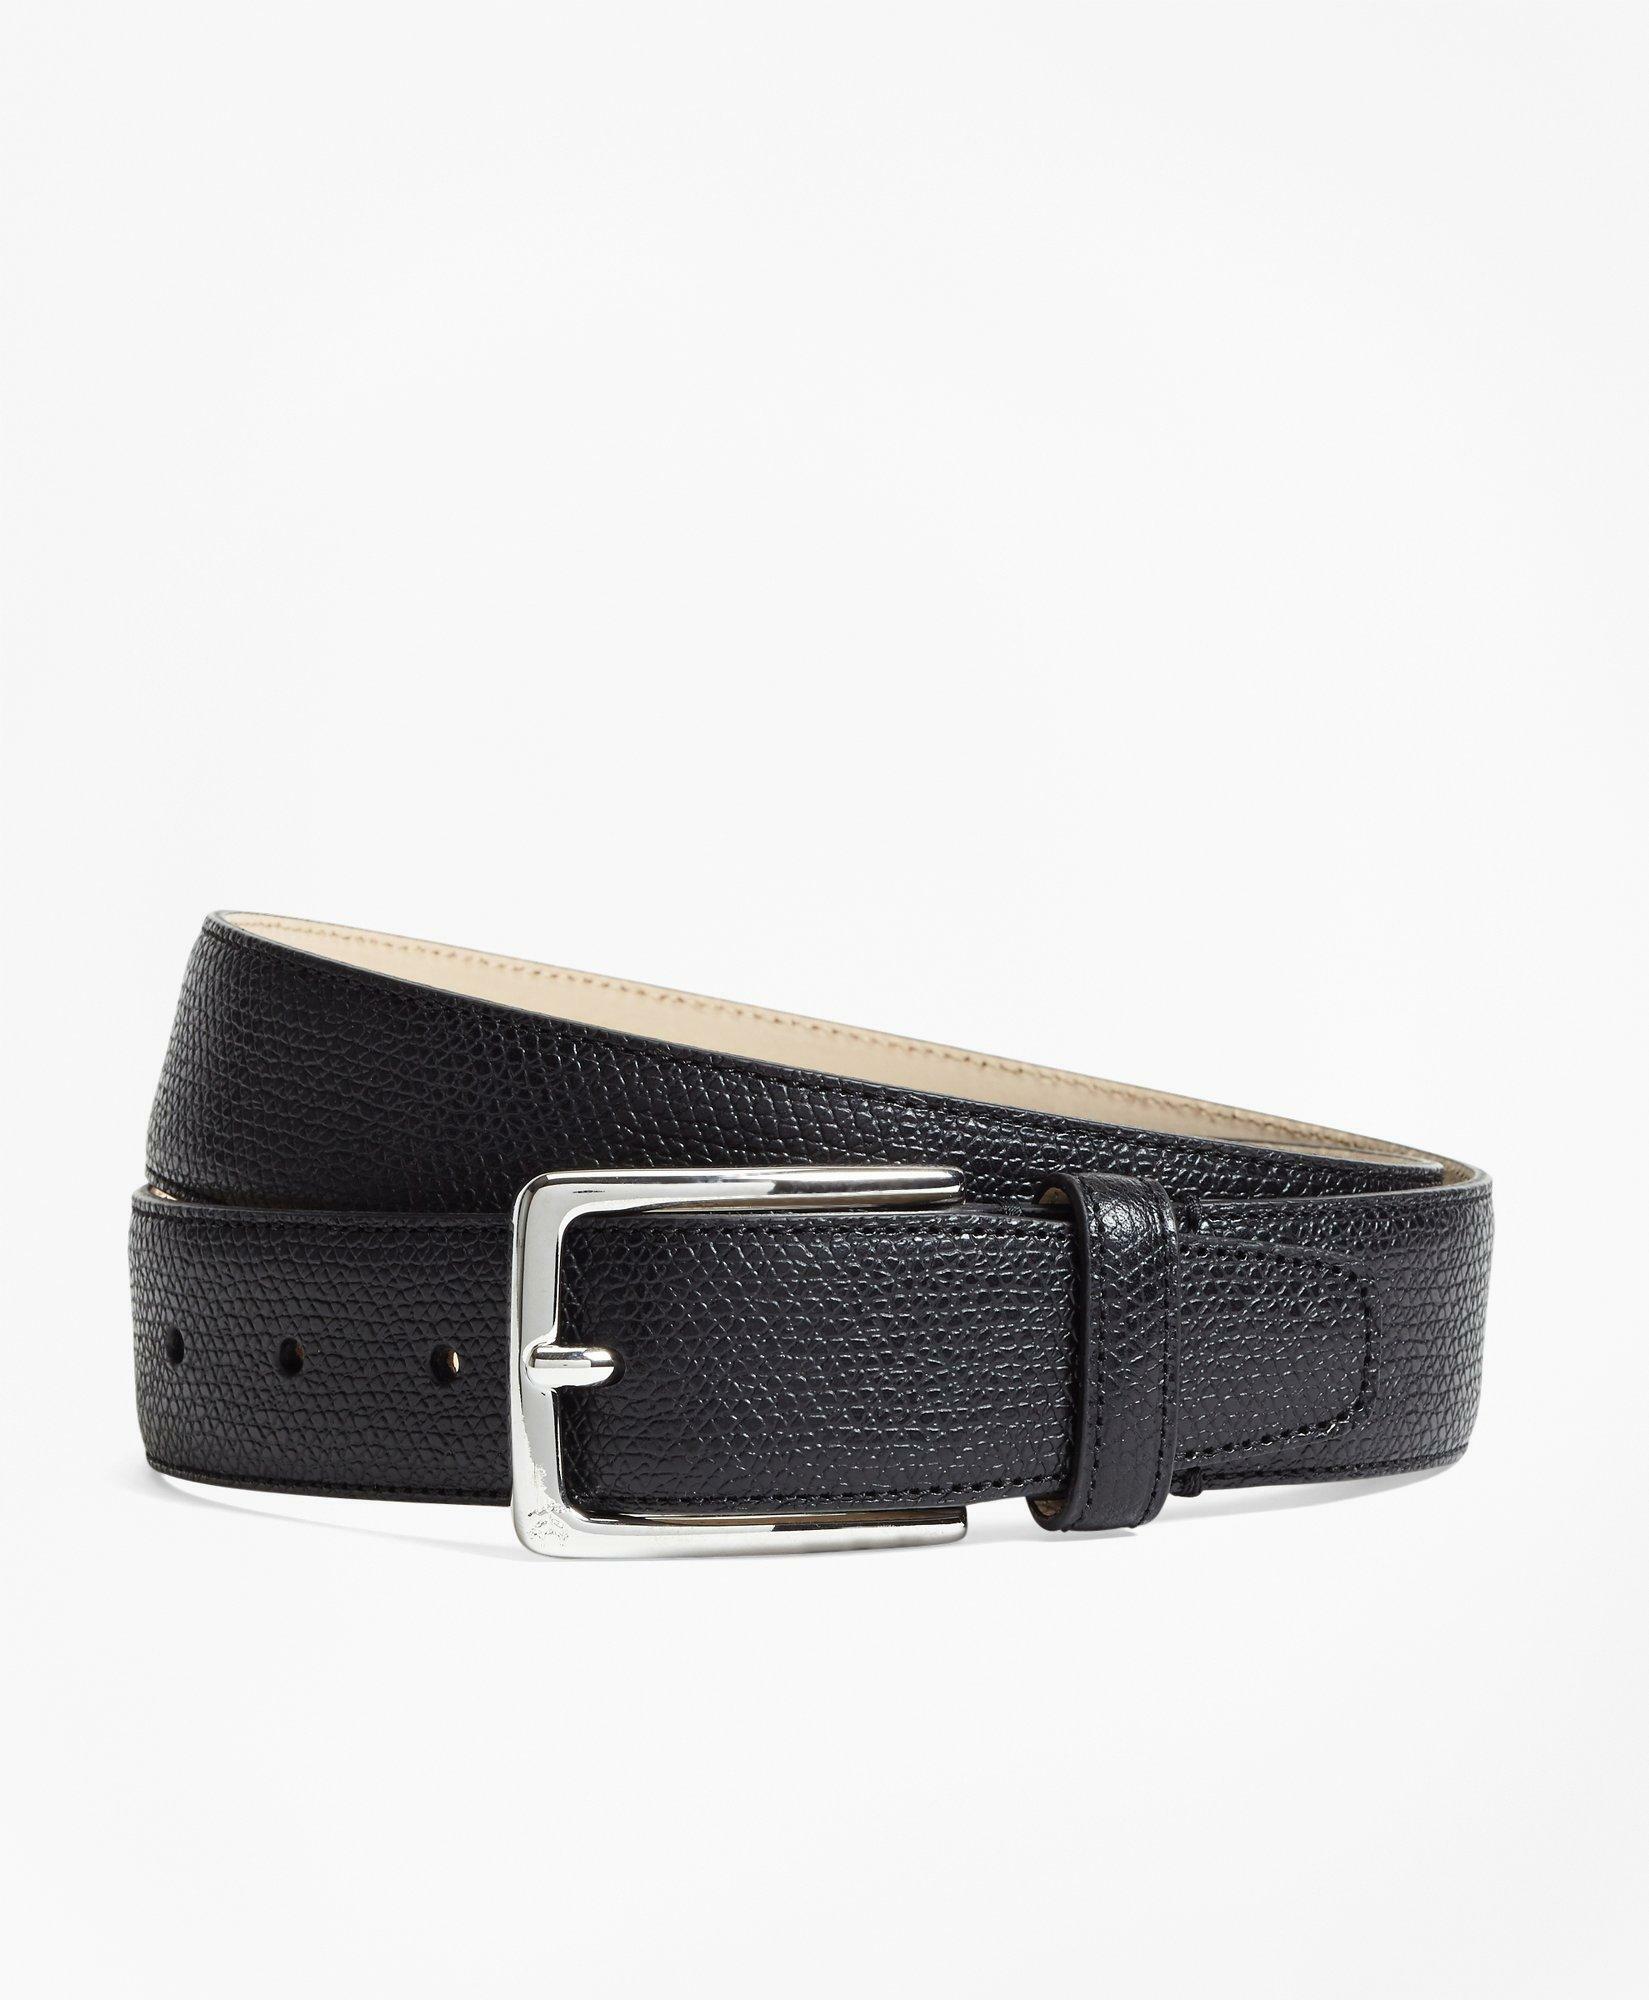 Brooks Brothers Men's 1818 Textured Leather Belt | Black